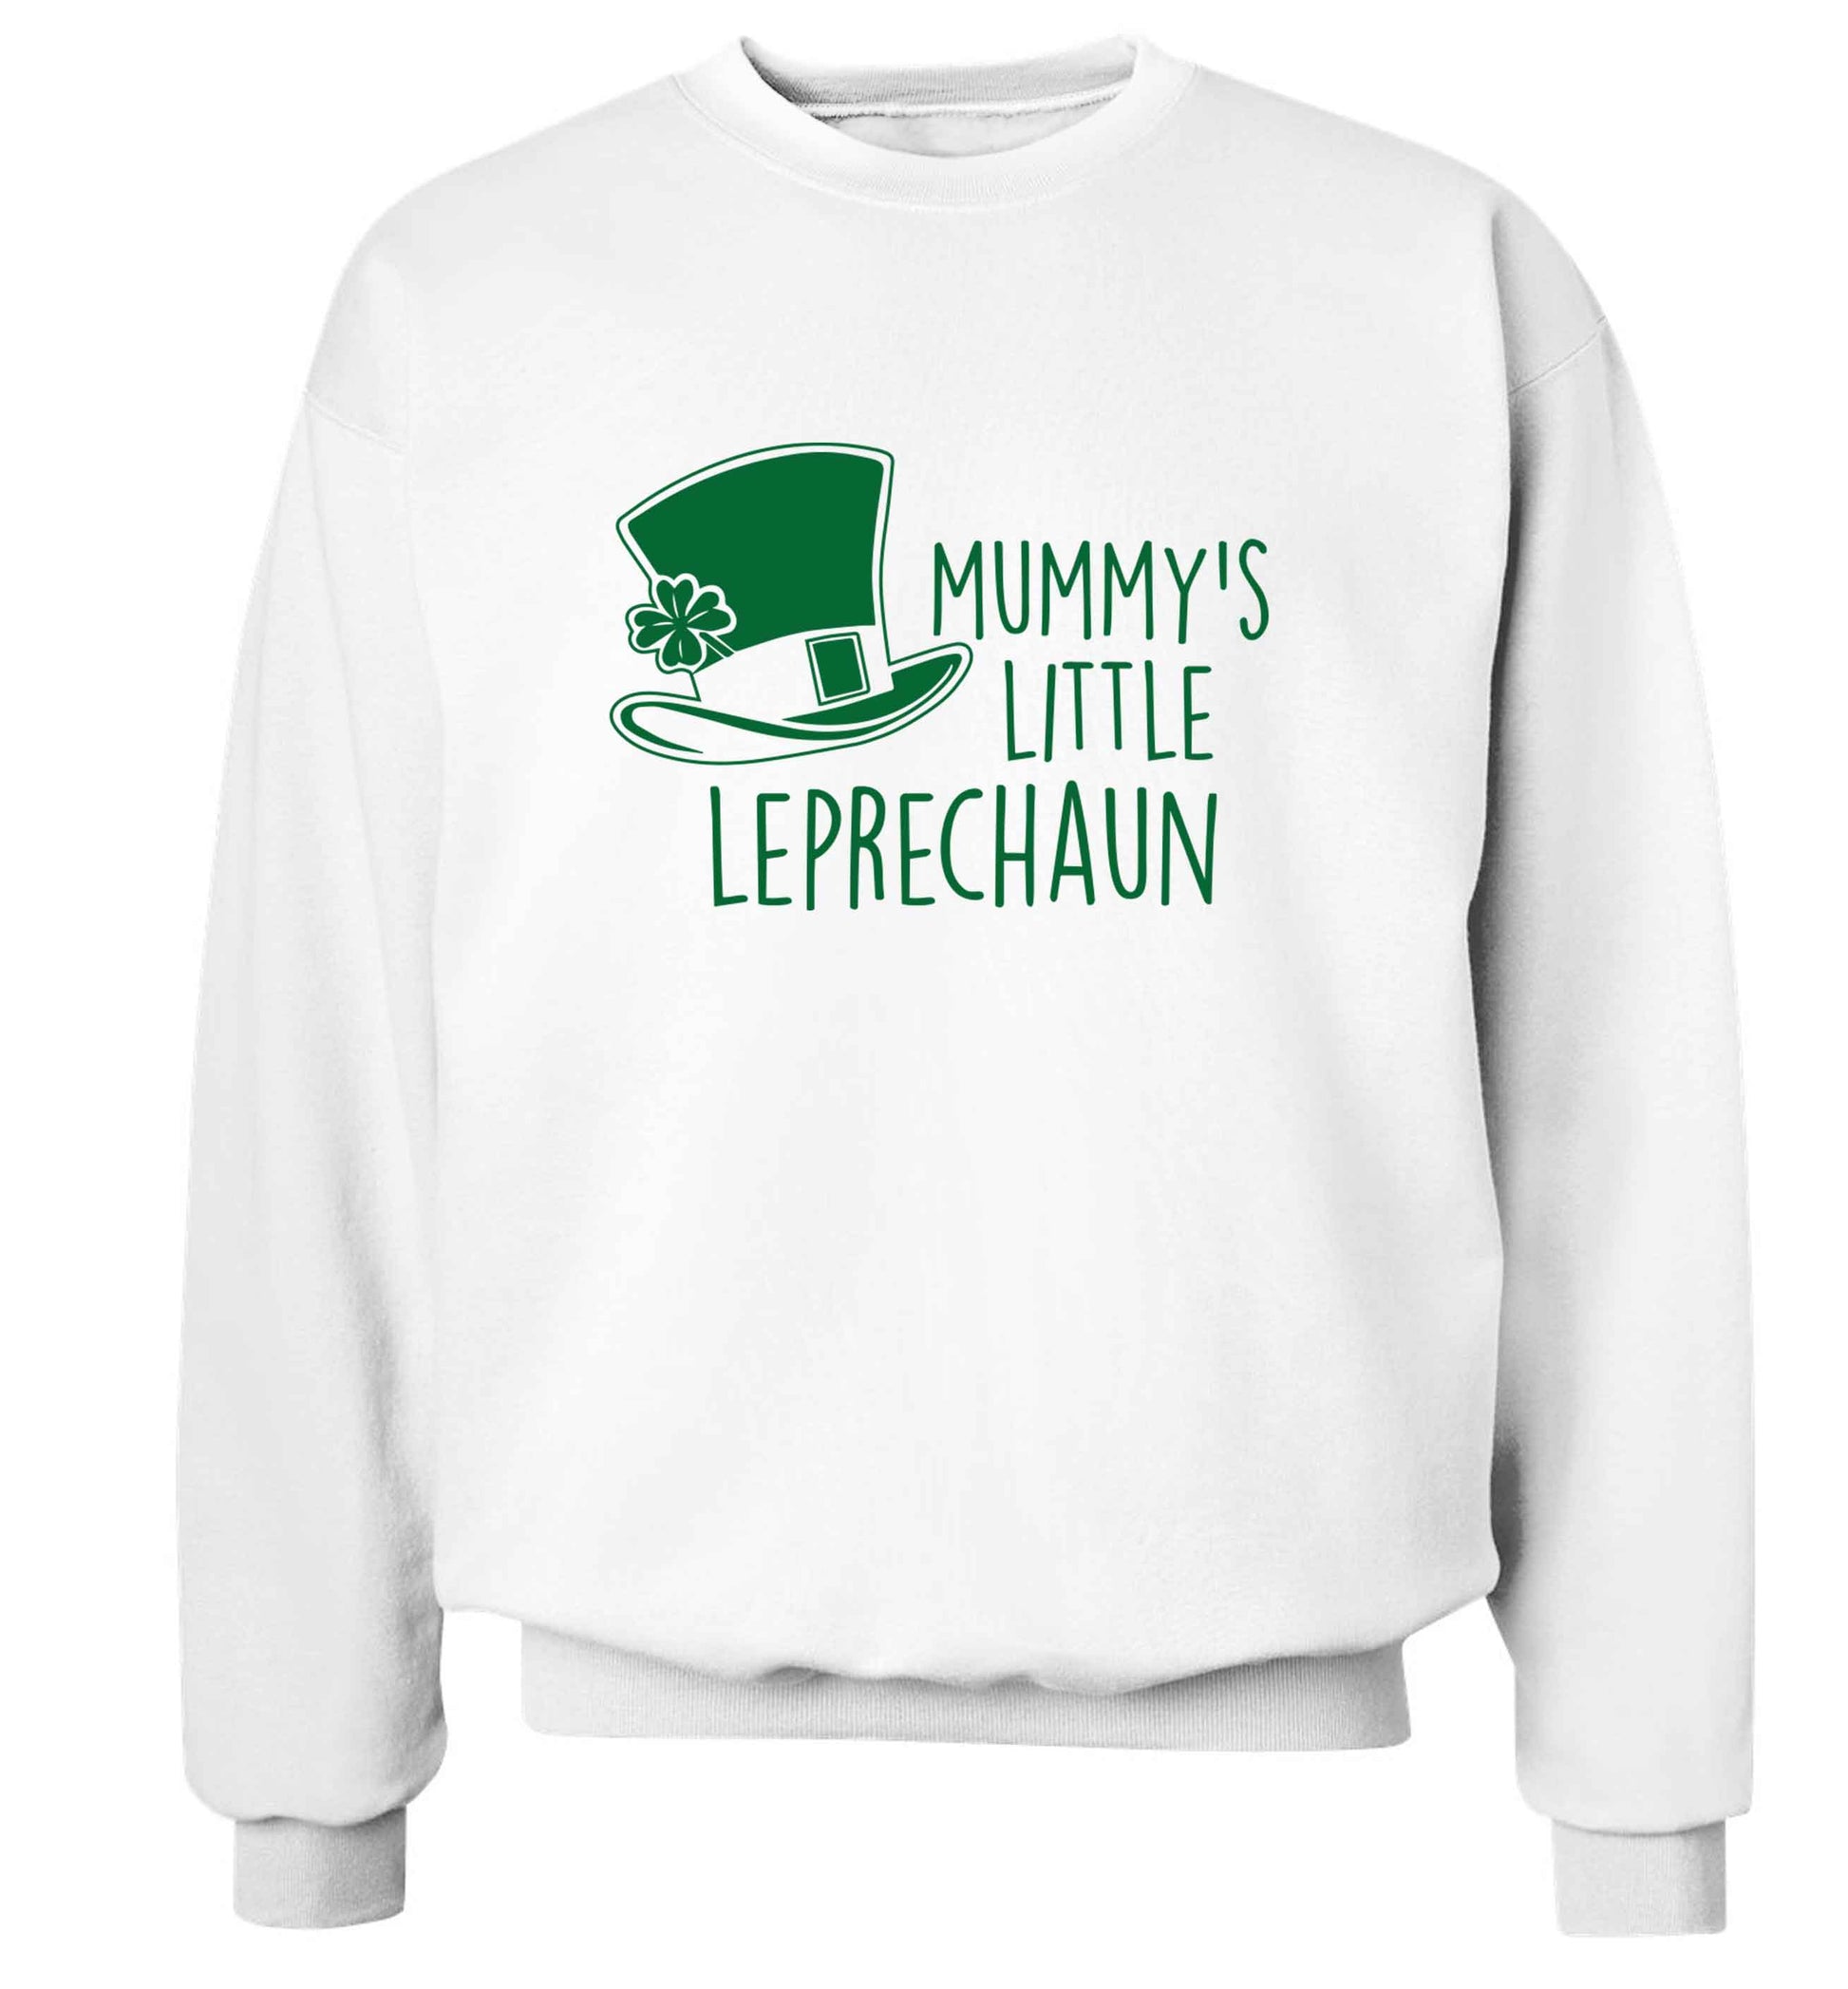 Mummy's little leprechaun adult's unisex white sweater 2XL